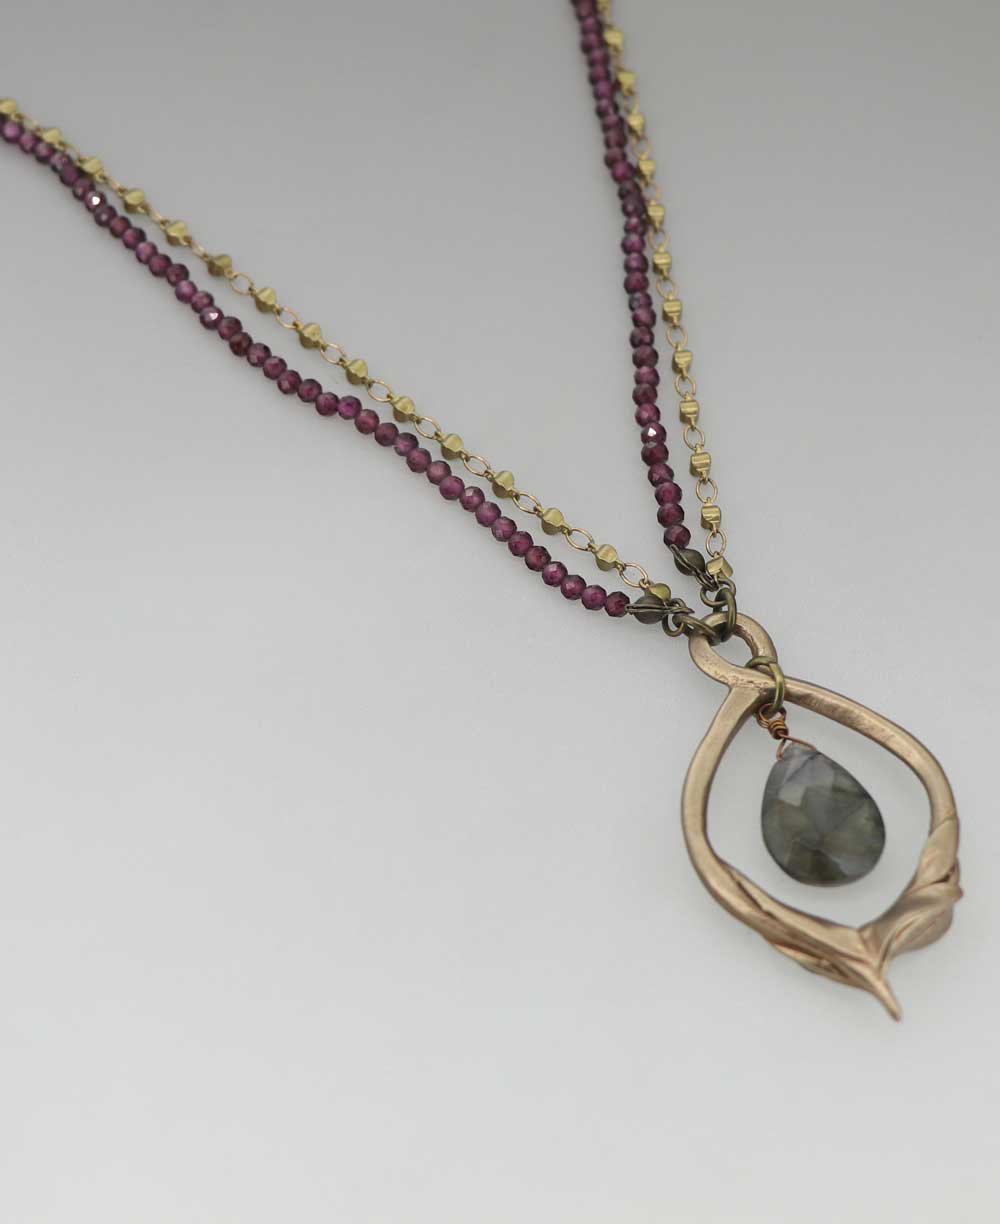 Lotus Petal Necklace with Rhodolite Garnet Chain - Necklaces